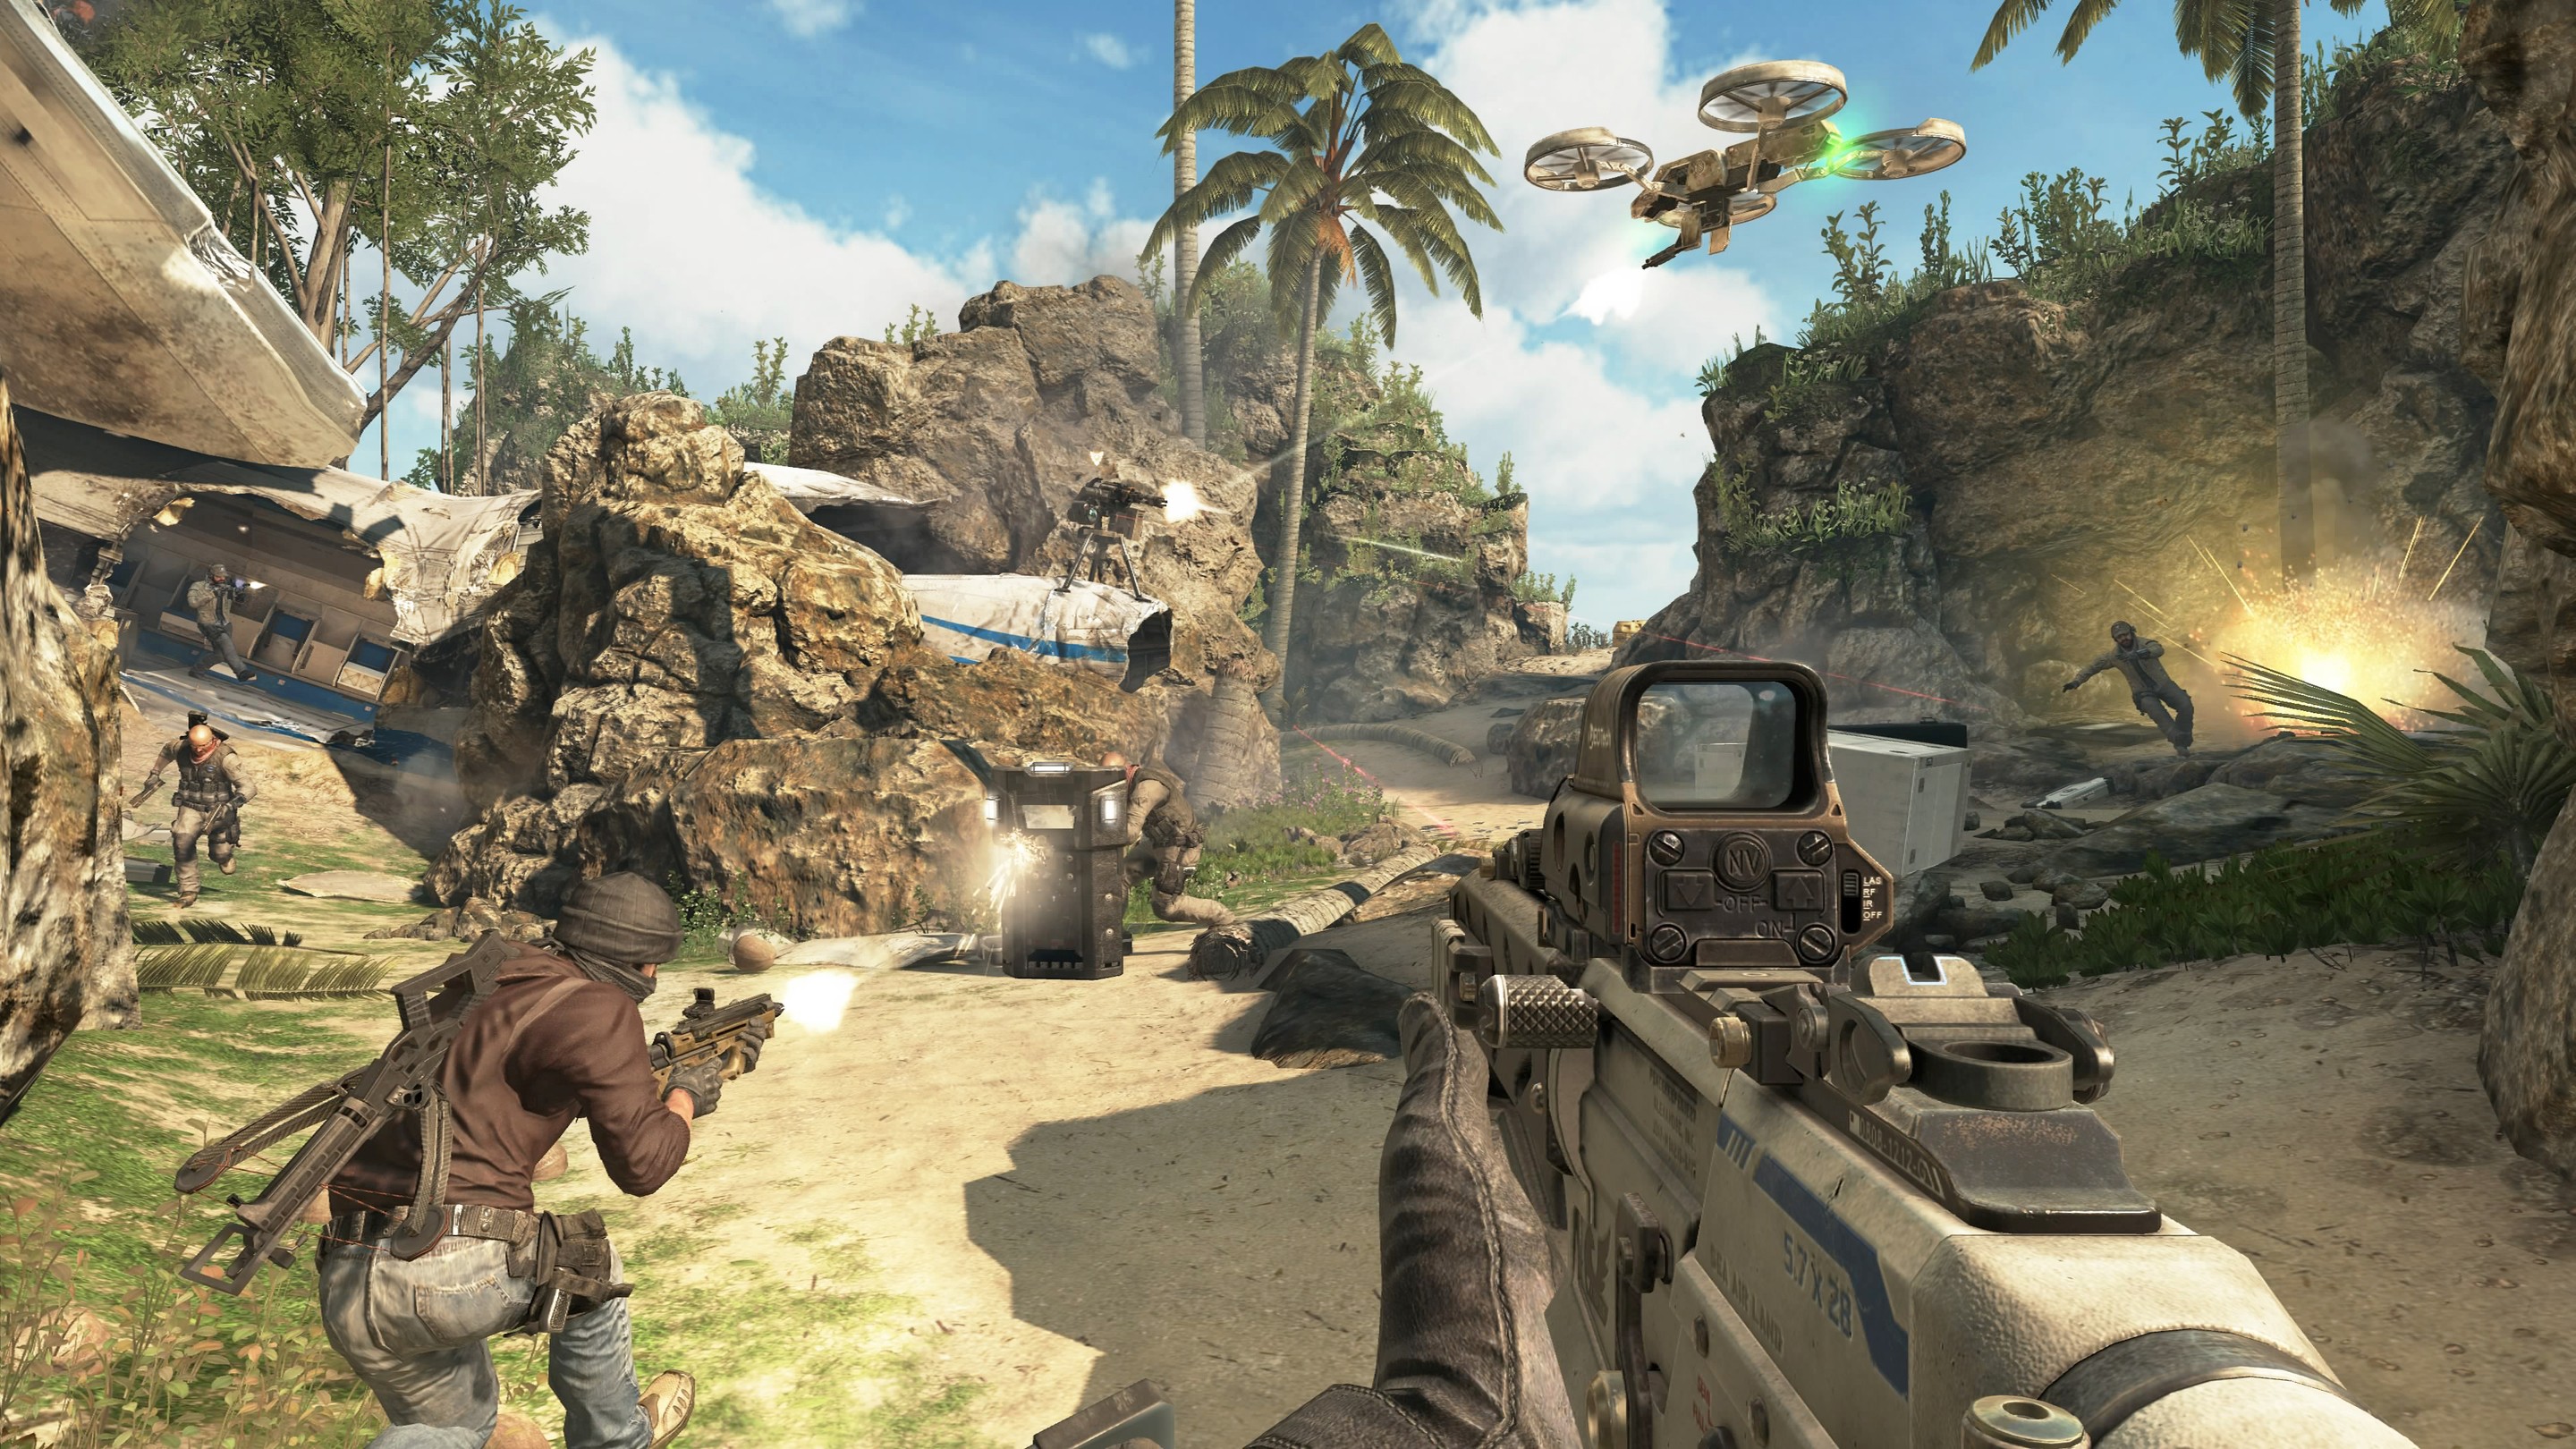 Comprar Call Of Duty Black Ops Ii Steam